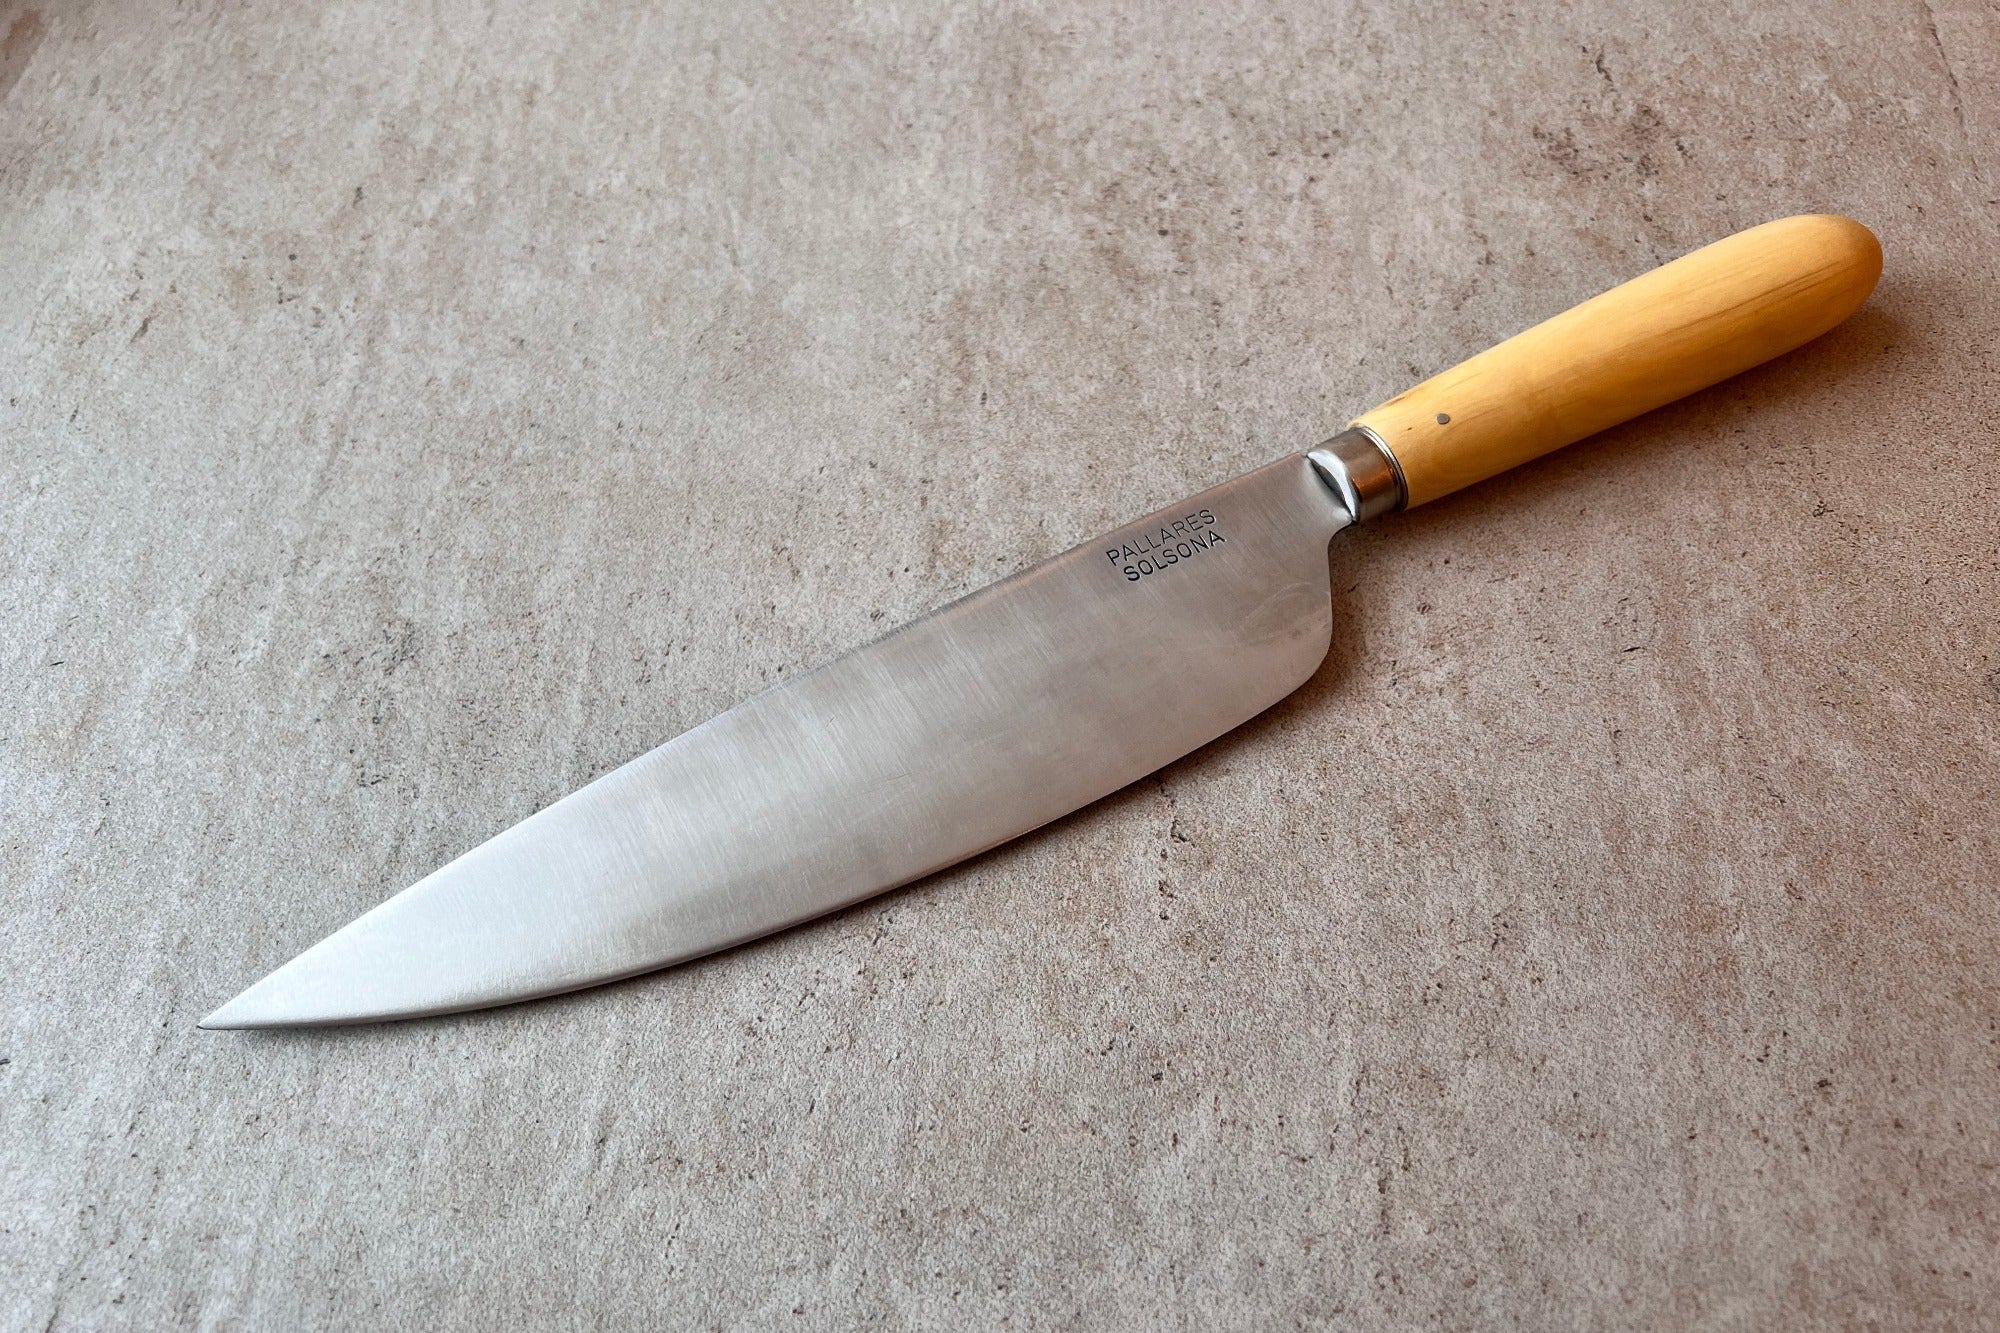 Pallares 220mm – Spanish kitchen knife